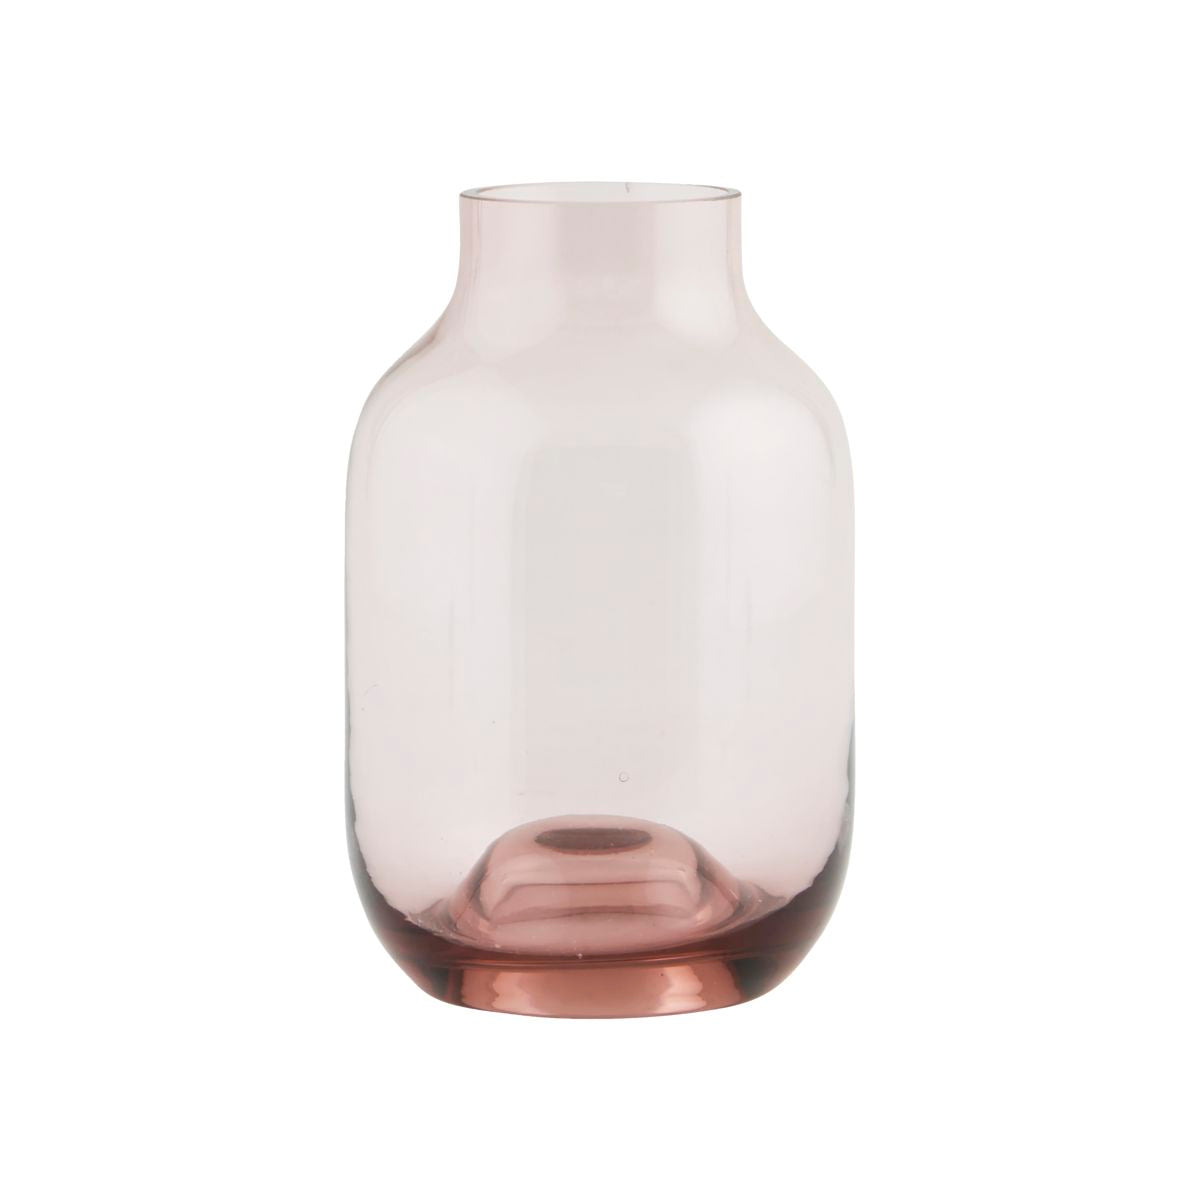 Vase i smukke rosa nuancer. Kan styles let med enkle små stilke eller grene fra haven.